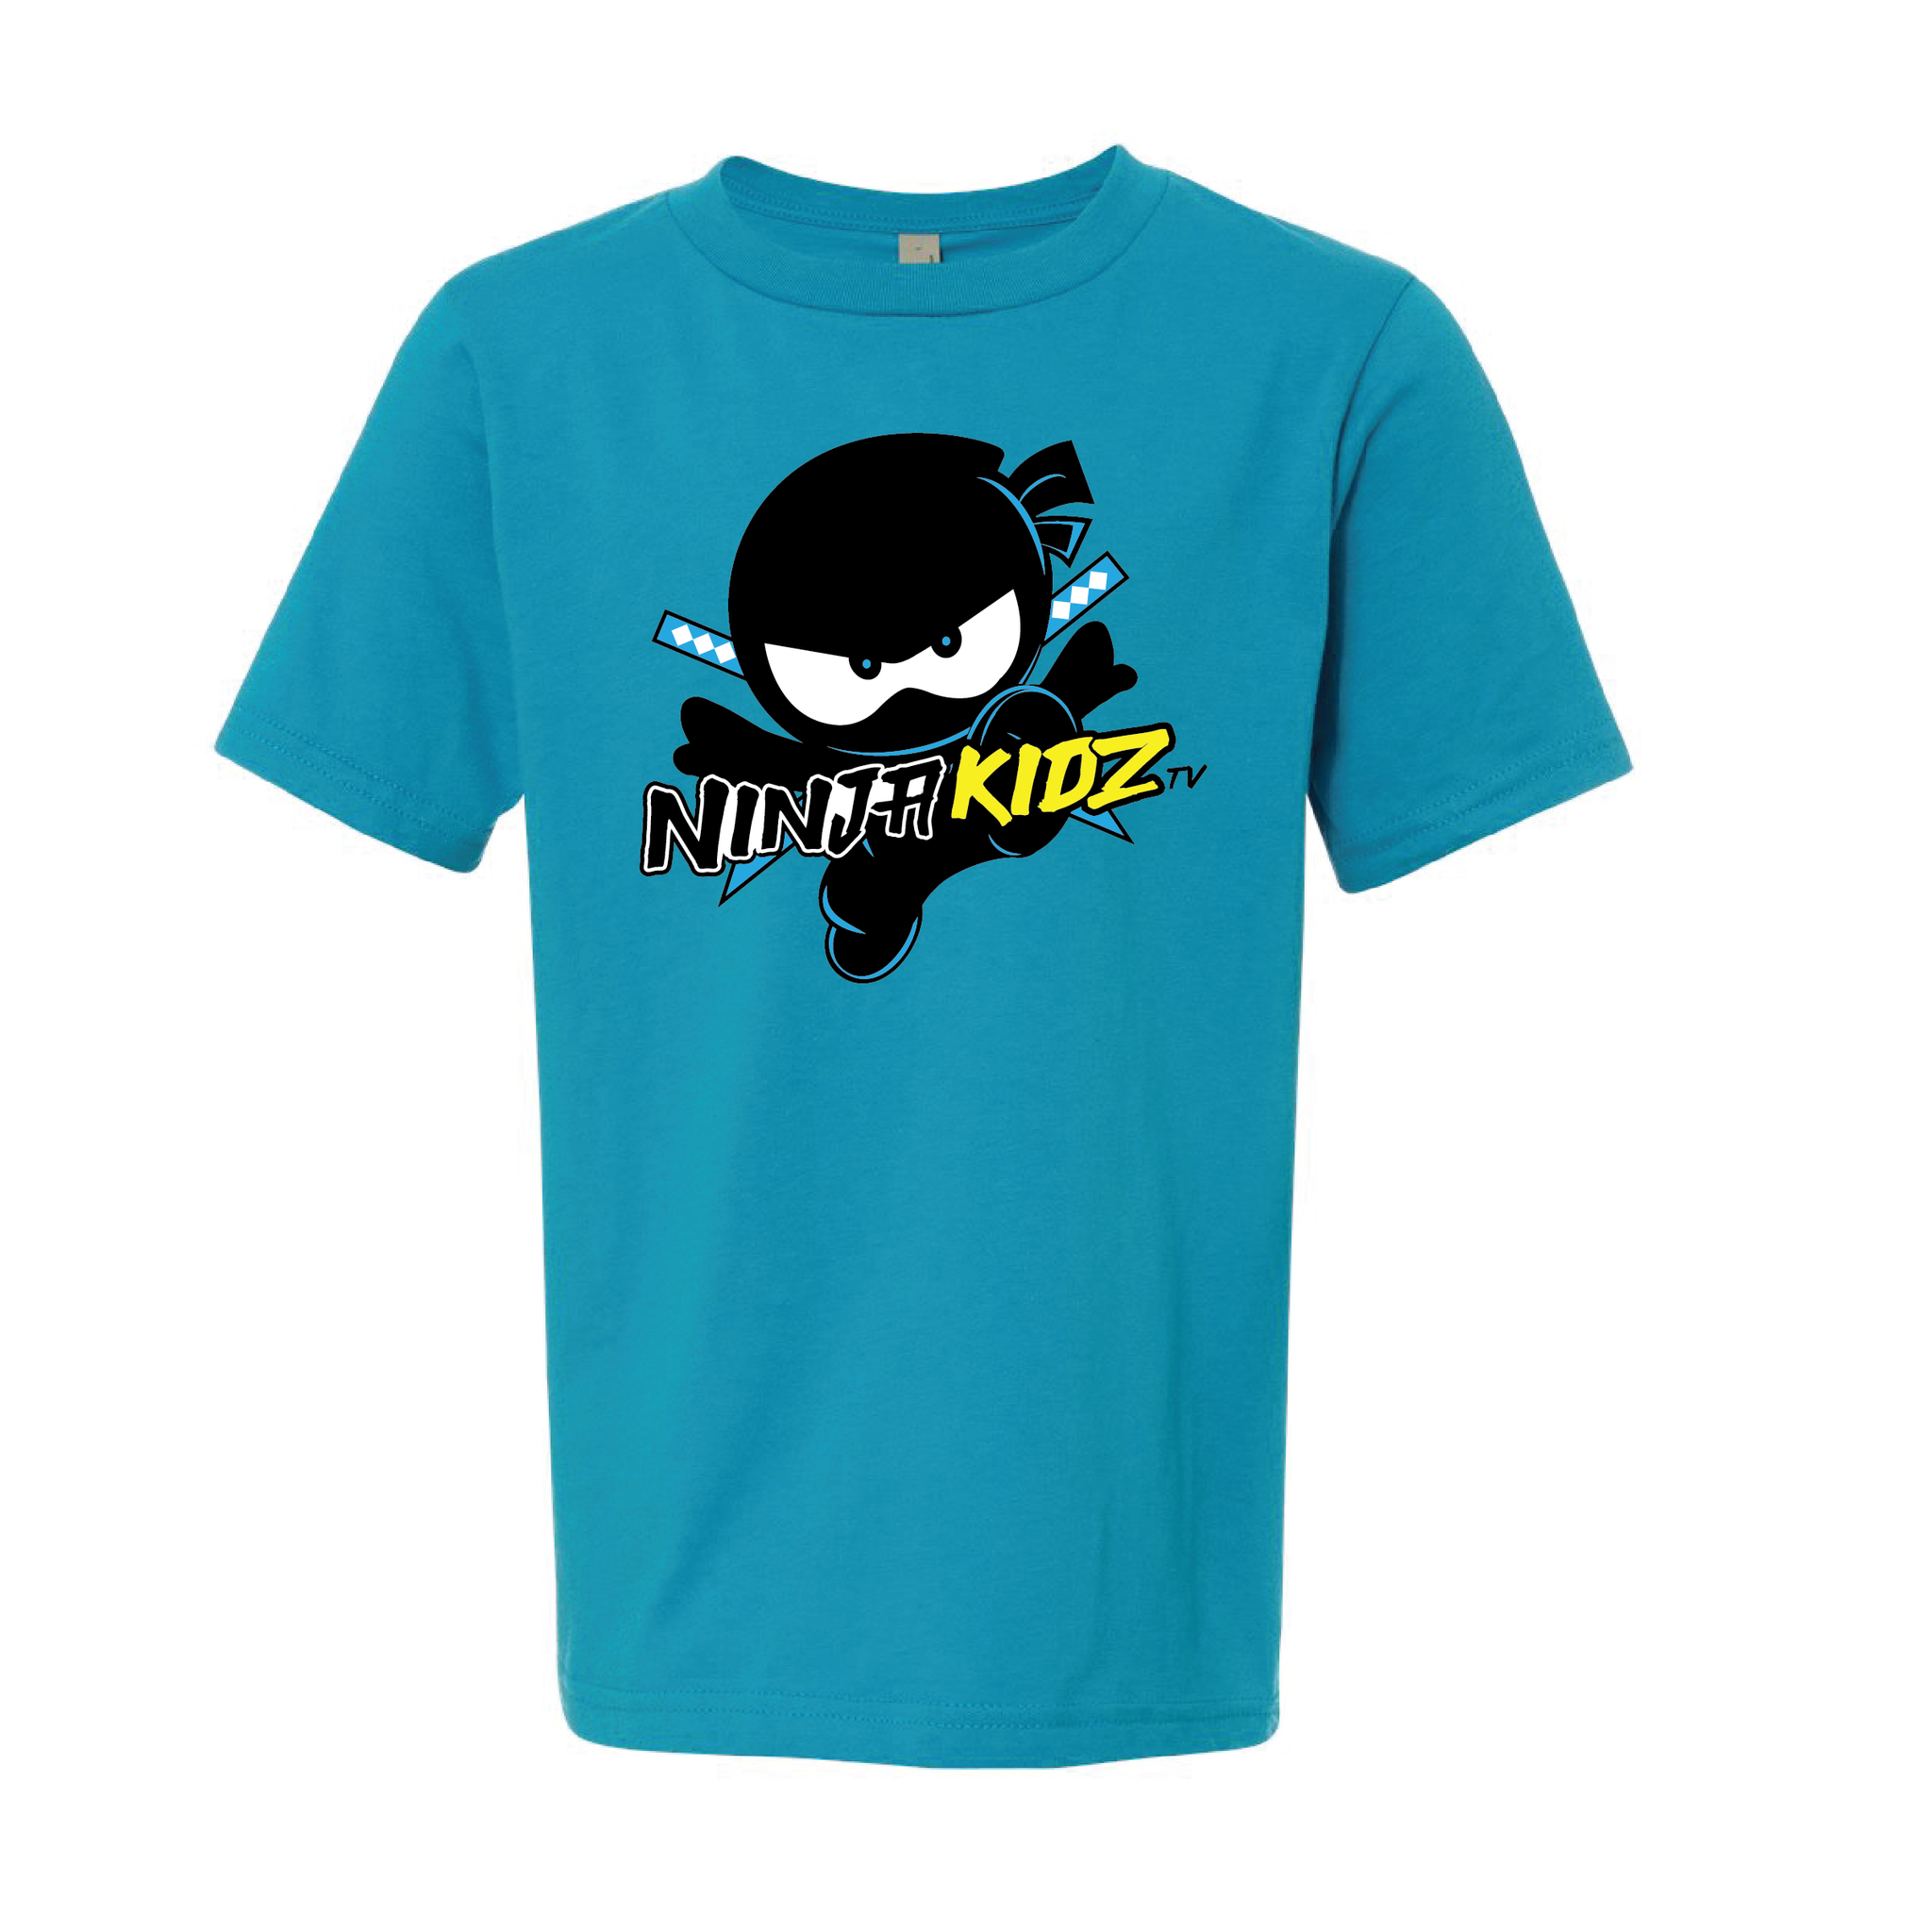 Ninja Kidz Tv T Shirt sold by Flame Evaleen, SKU 907553